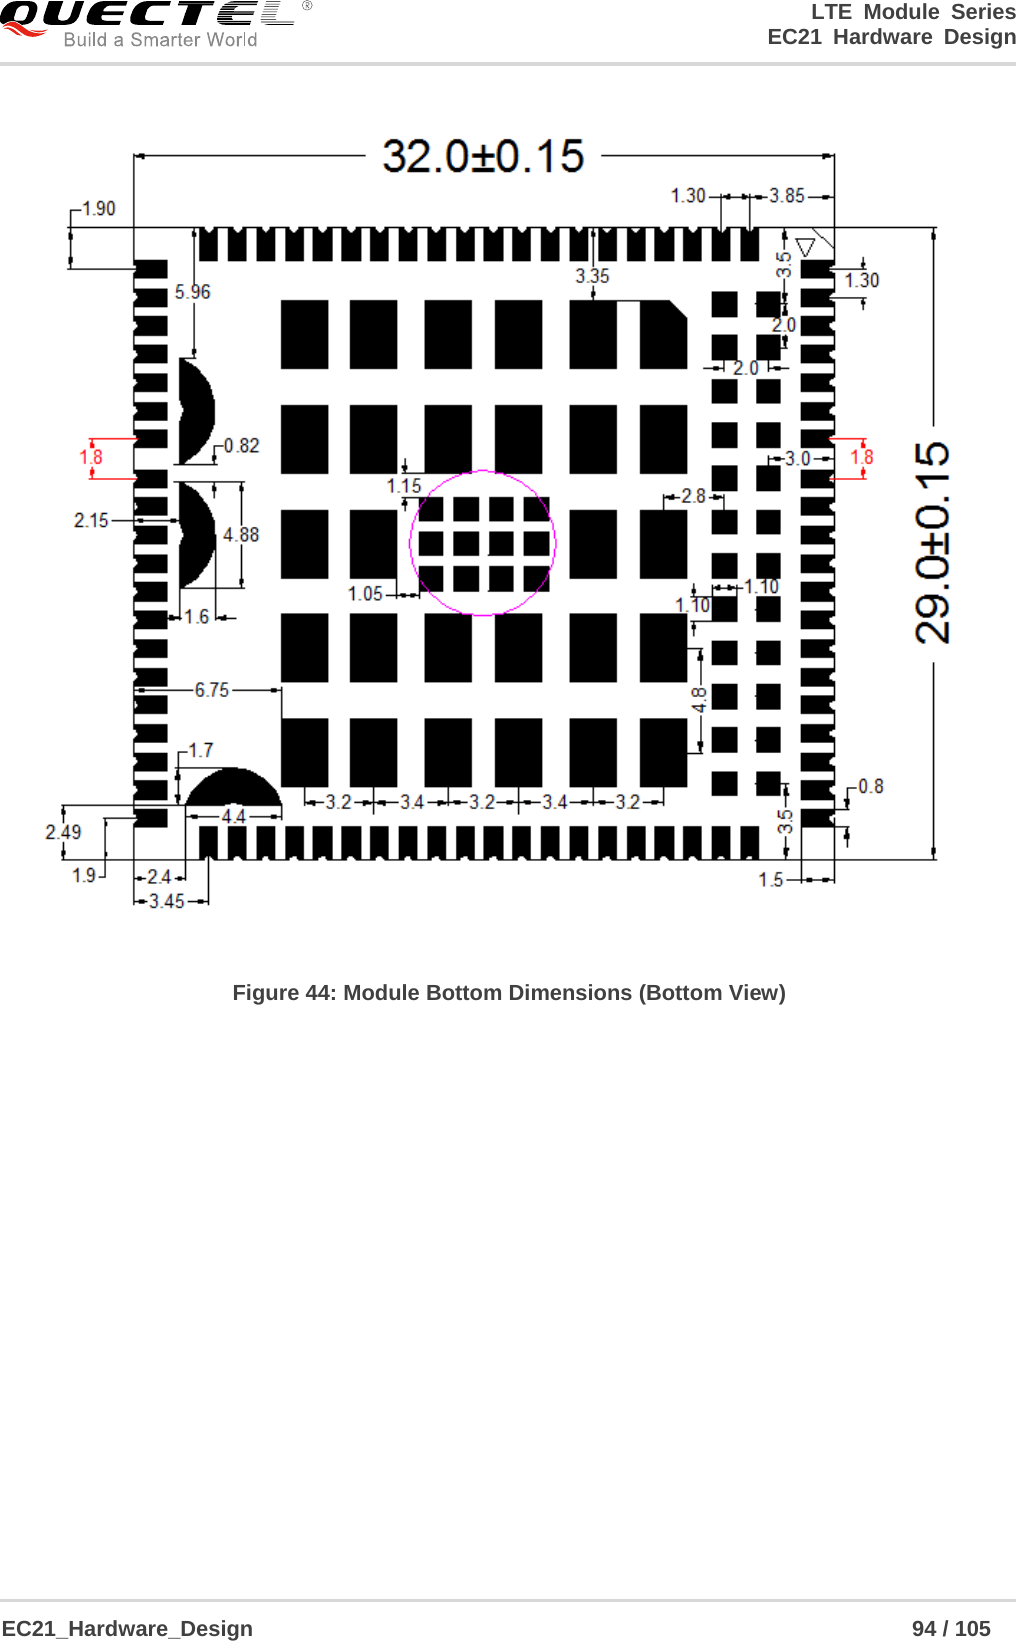                                                                        LTE Module Series                                                                 EC21 Hardware Design  EC21_Hardware_Design                                                            94 / 105     Figure 44: Module Bottom Dimensions (Bottom View)                 